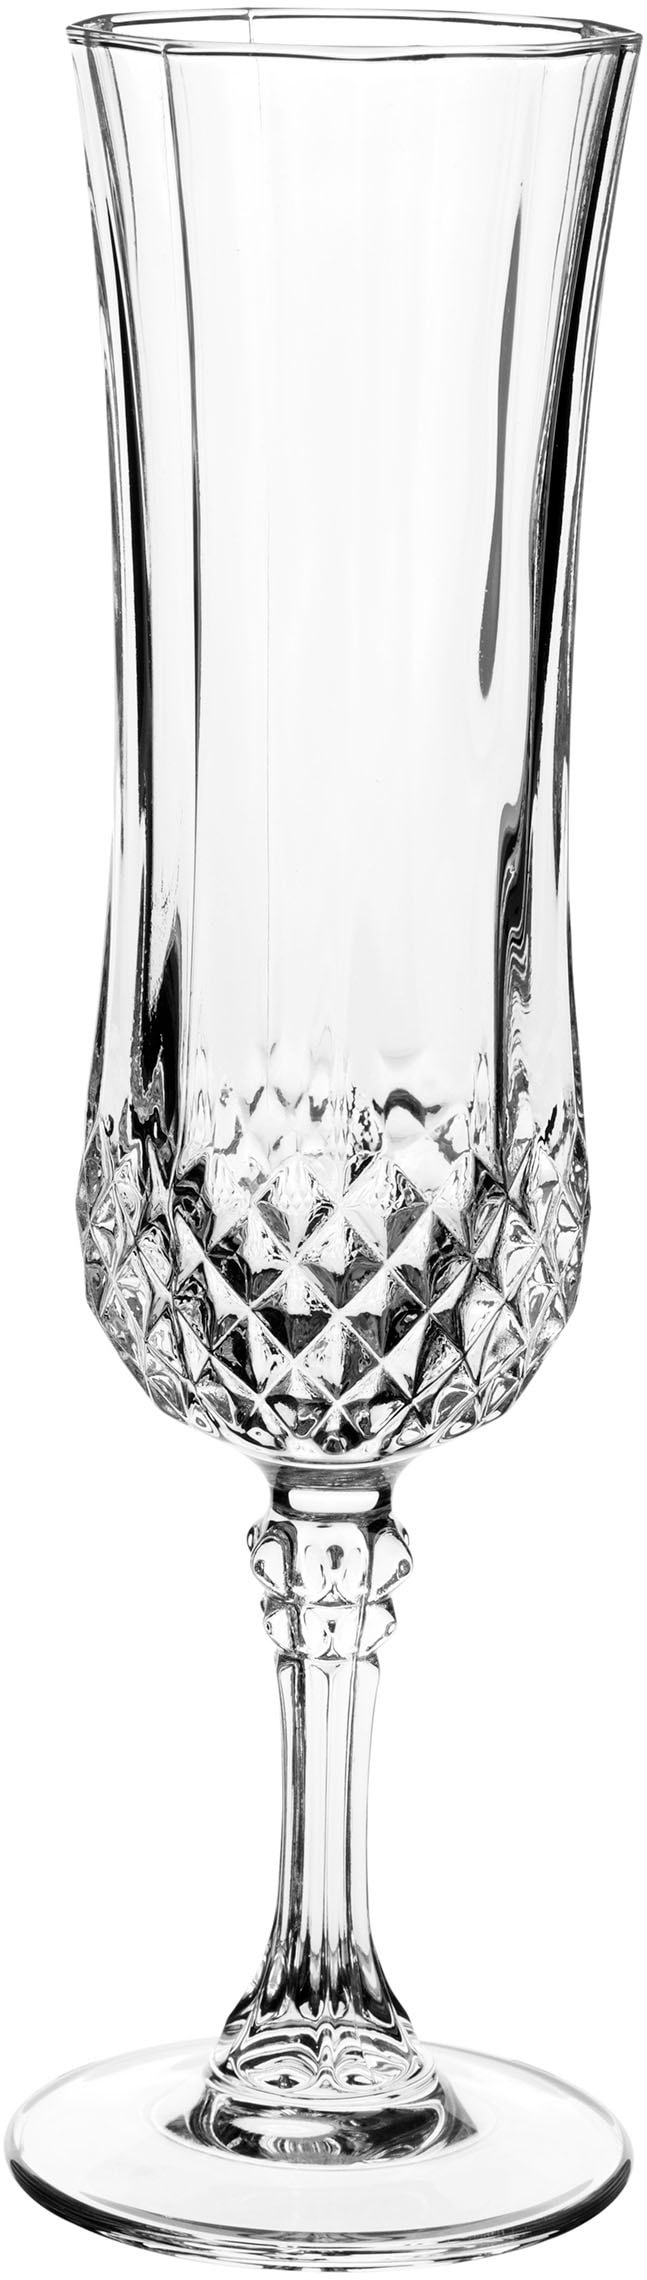 ECLAT Sektglas »Longchamp«, (Set, 6 tlg., 6 Sektgläser), 6-teilig, 140 ml, Made in France